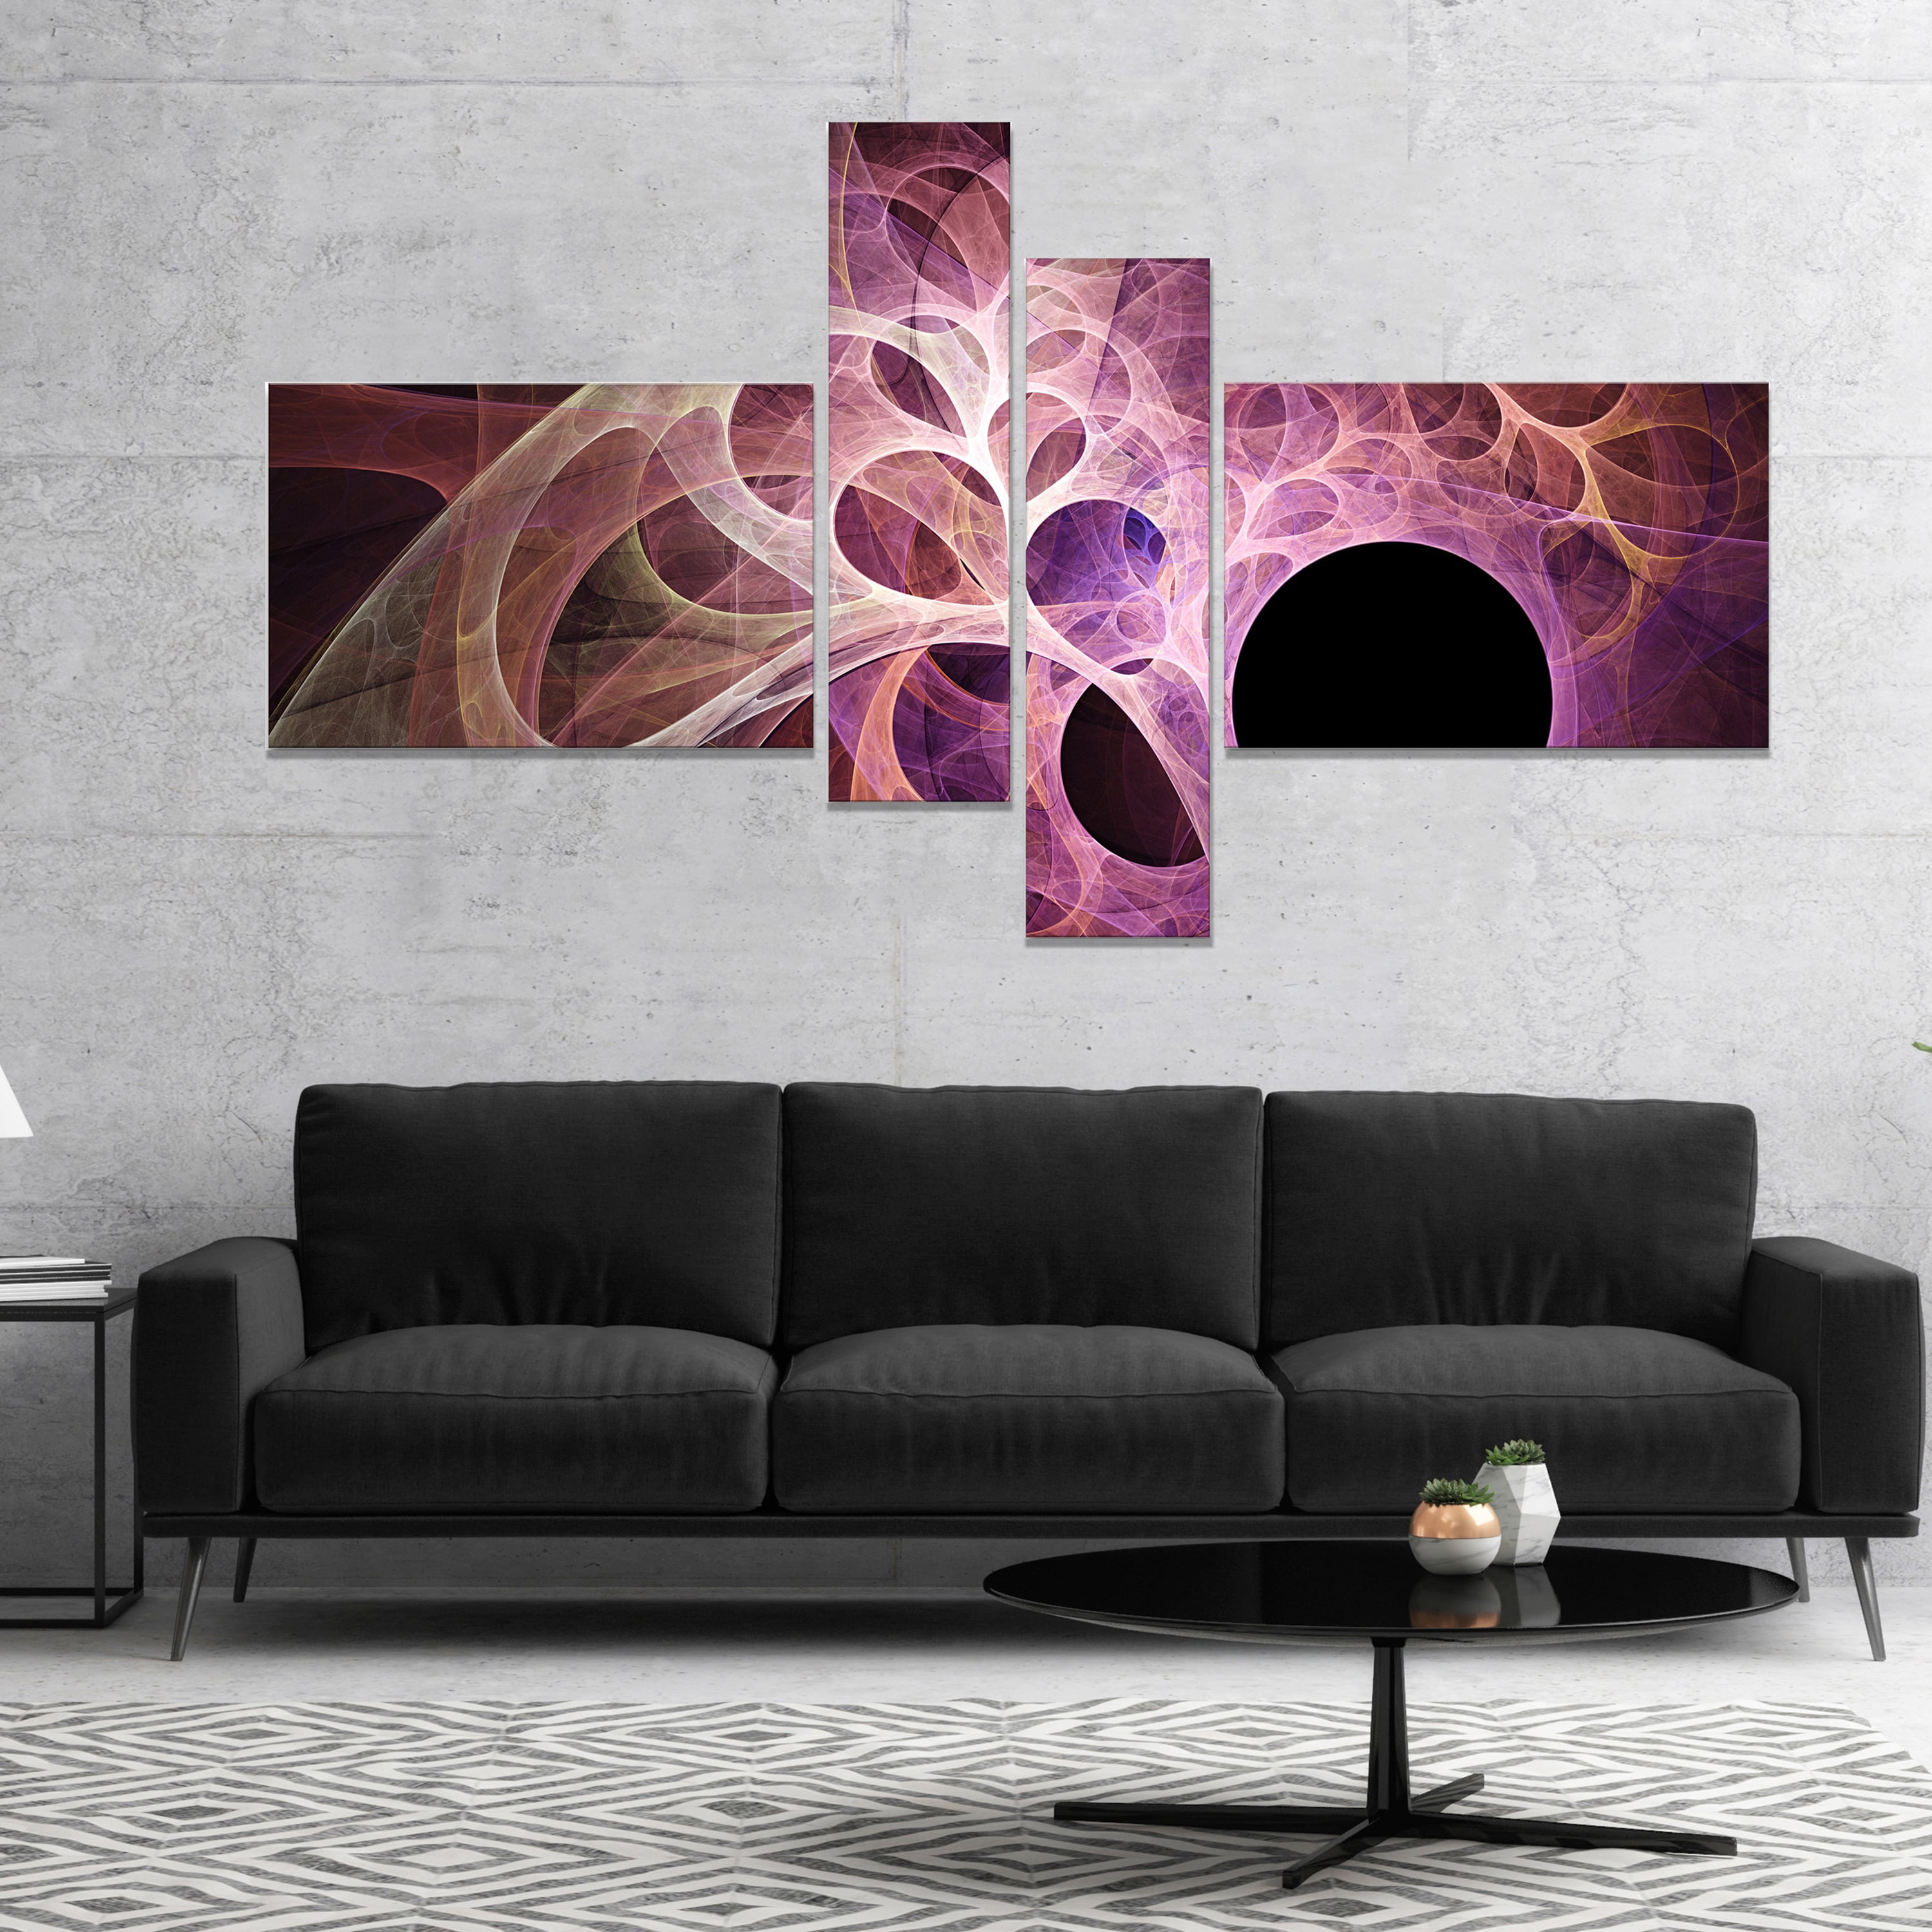 Electric Waving Purples Wall26 12" x 12" Canvas Prints Wall Art